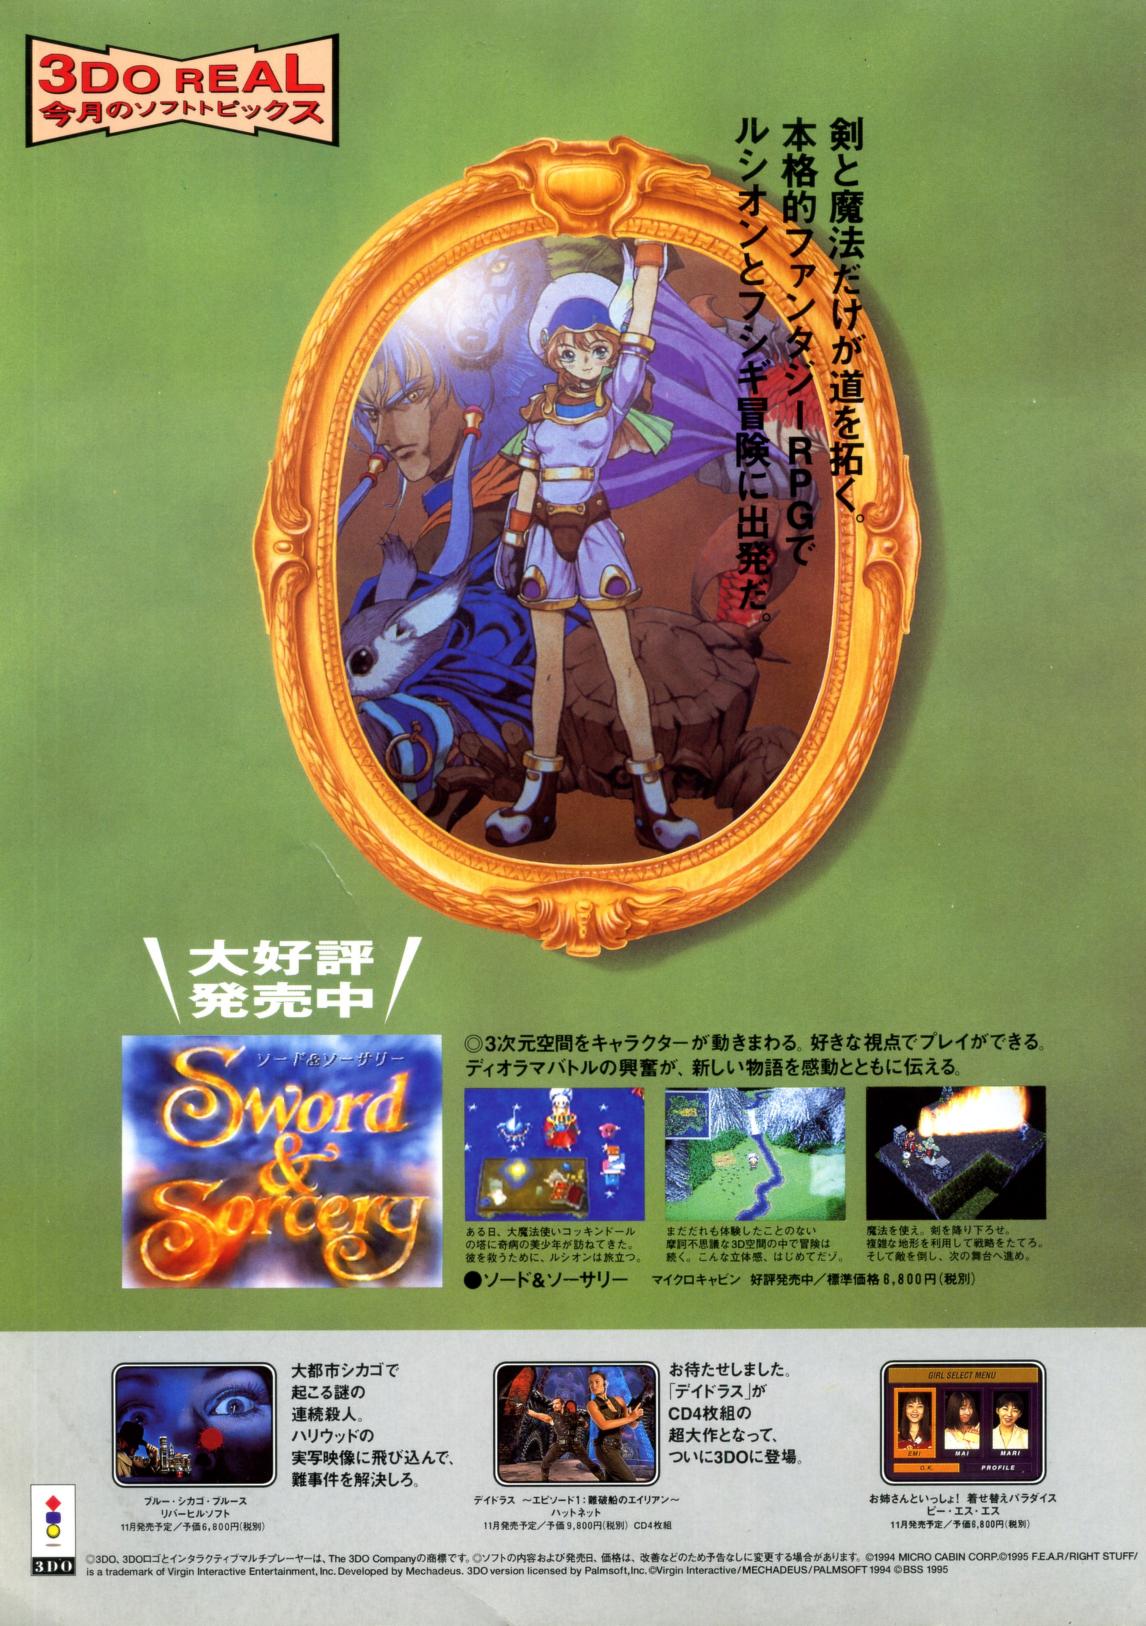 LIVE! 3DO MAGAZINE 11-12 1995 (japan) : Tokuma Shoten Intermedia 